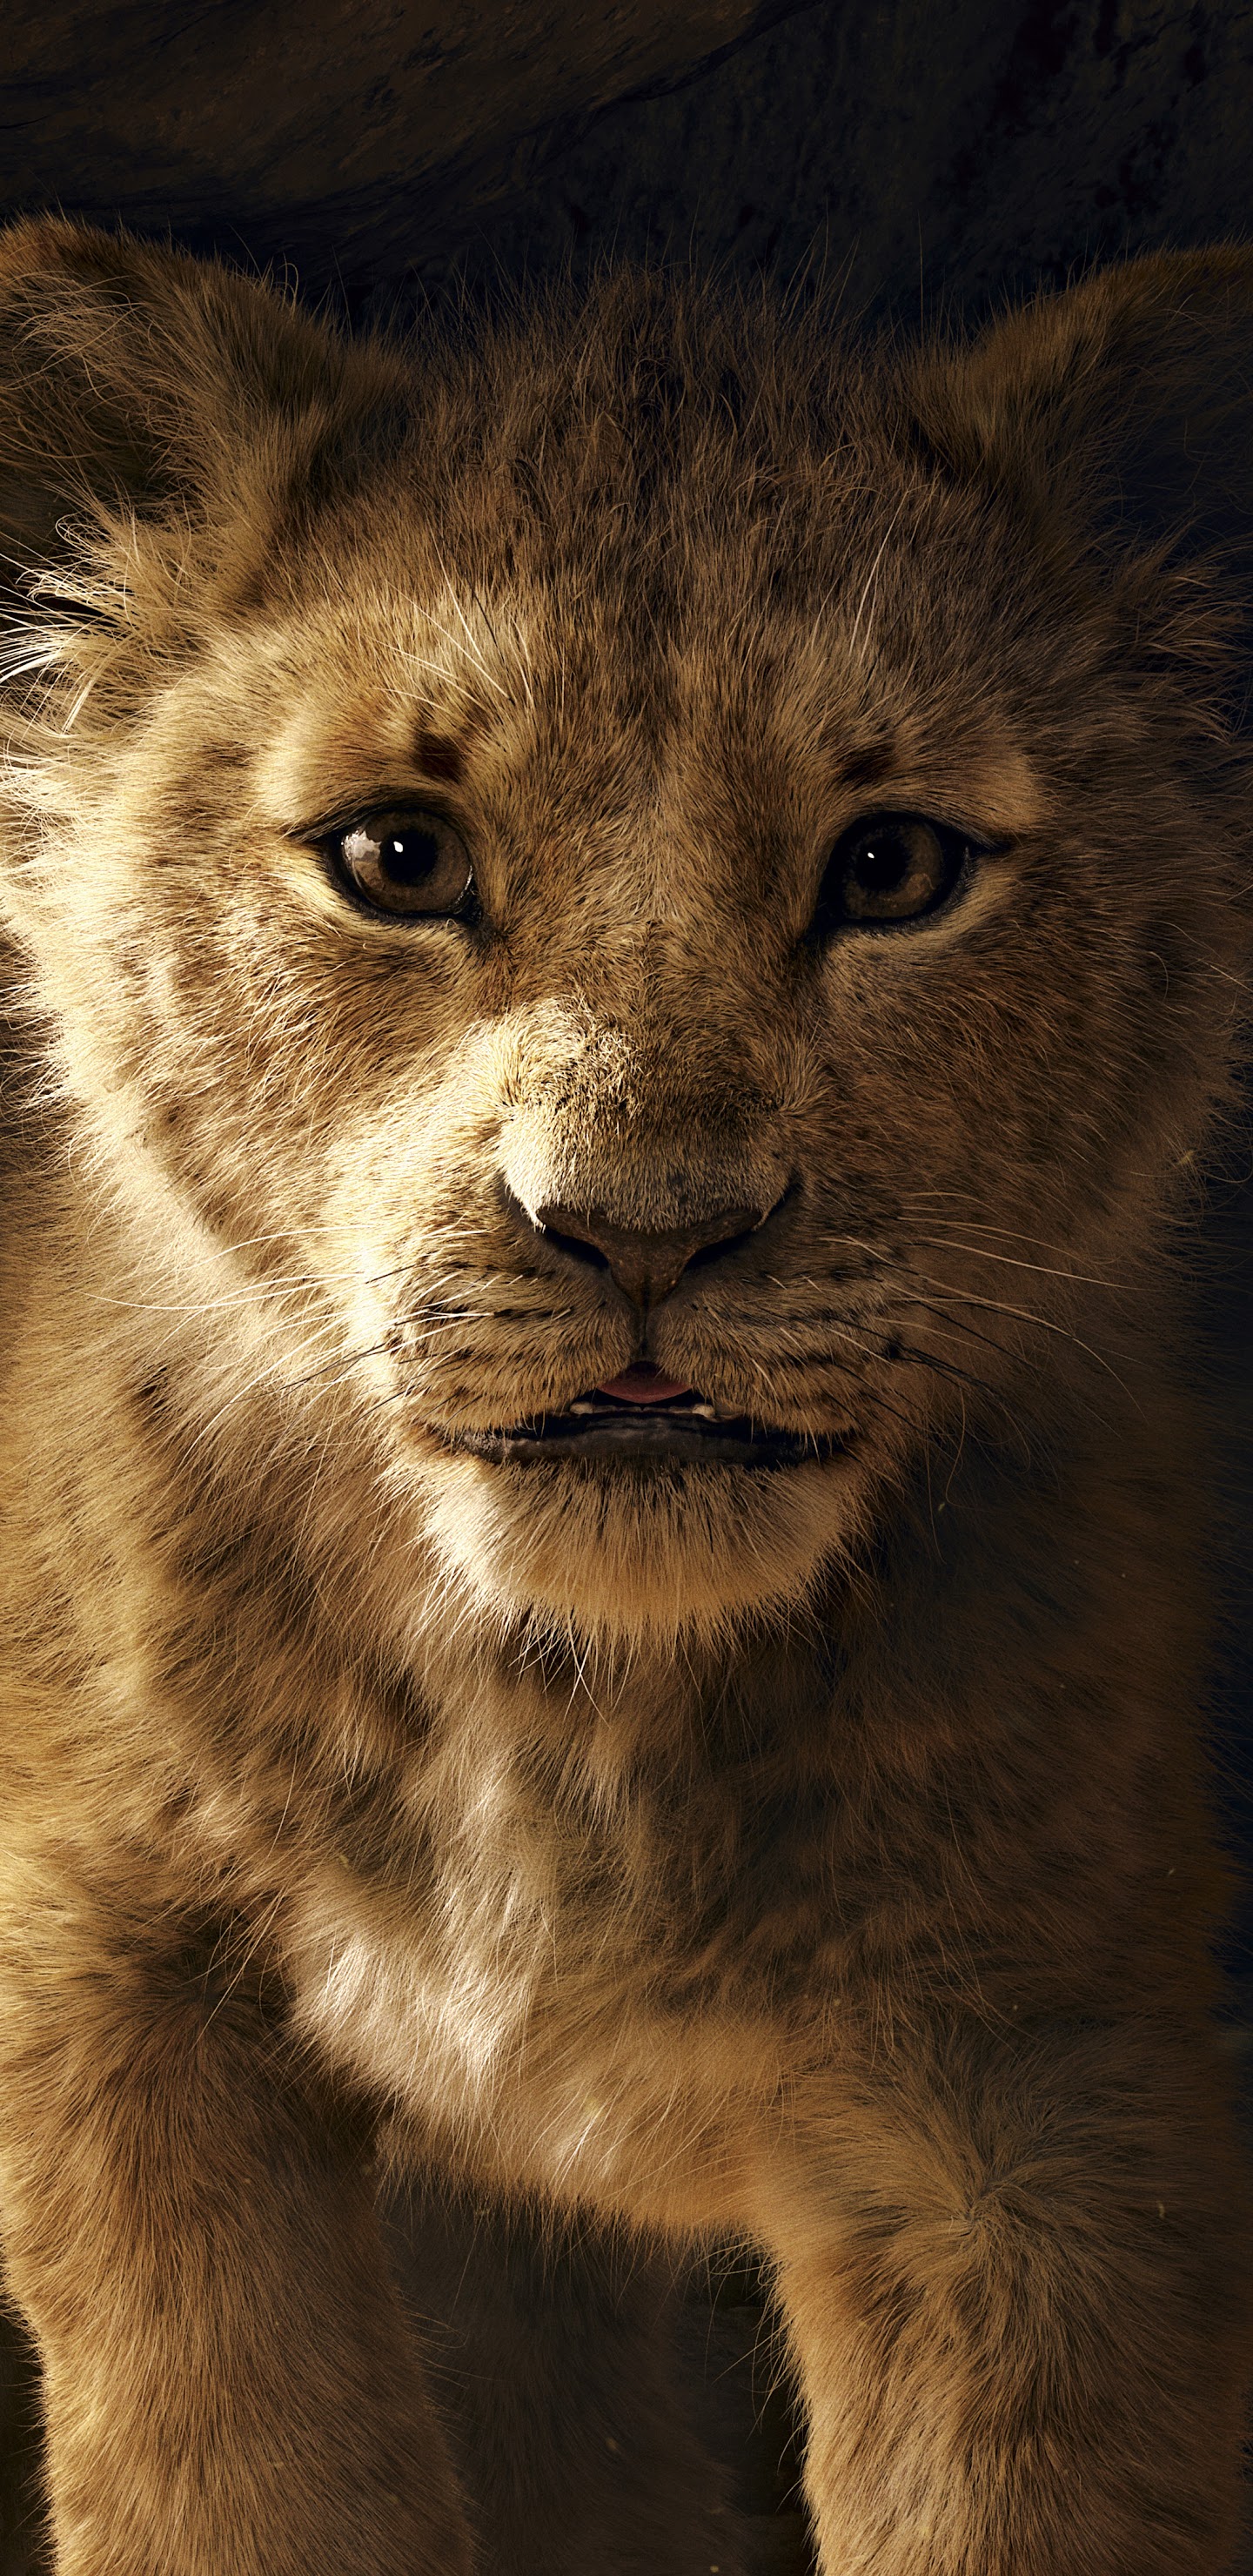 The Lion King Simba 8k Wallpaper